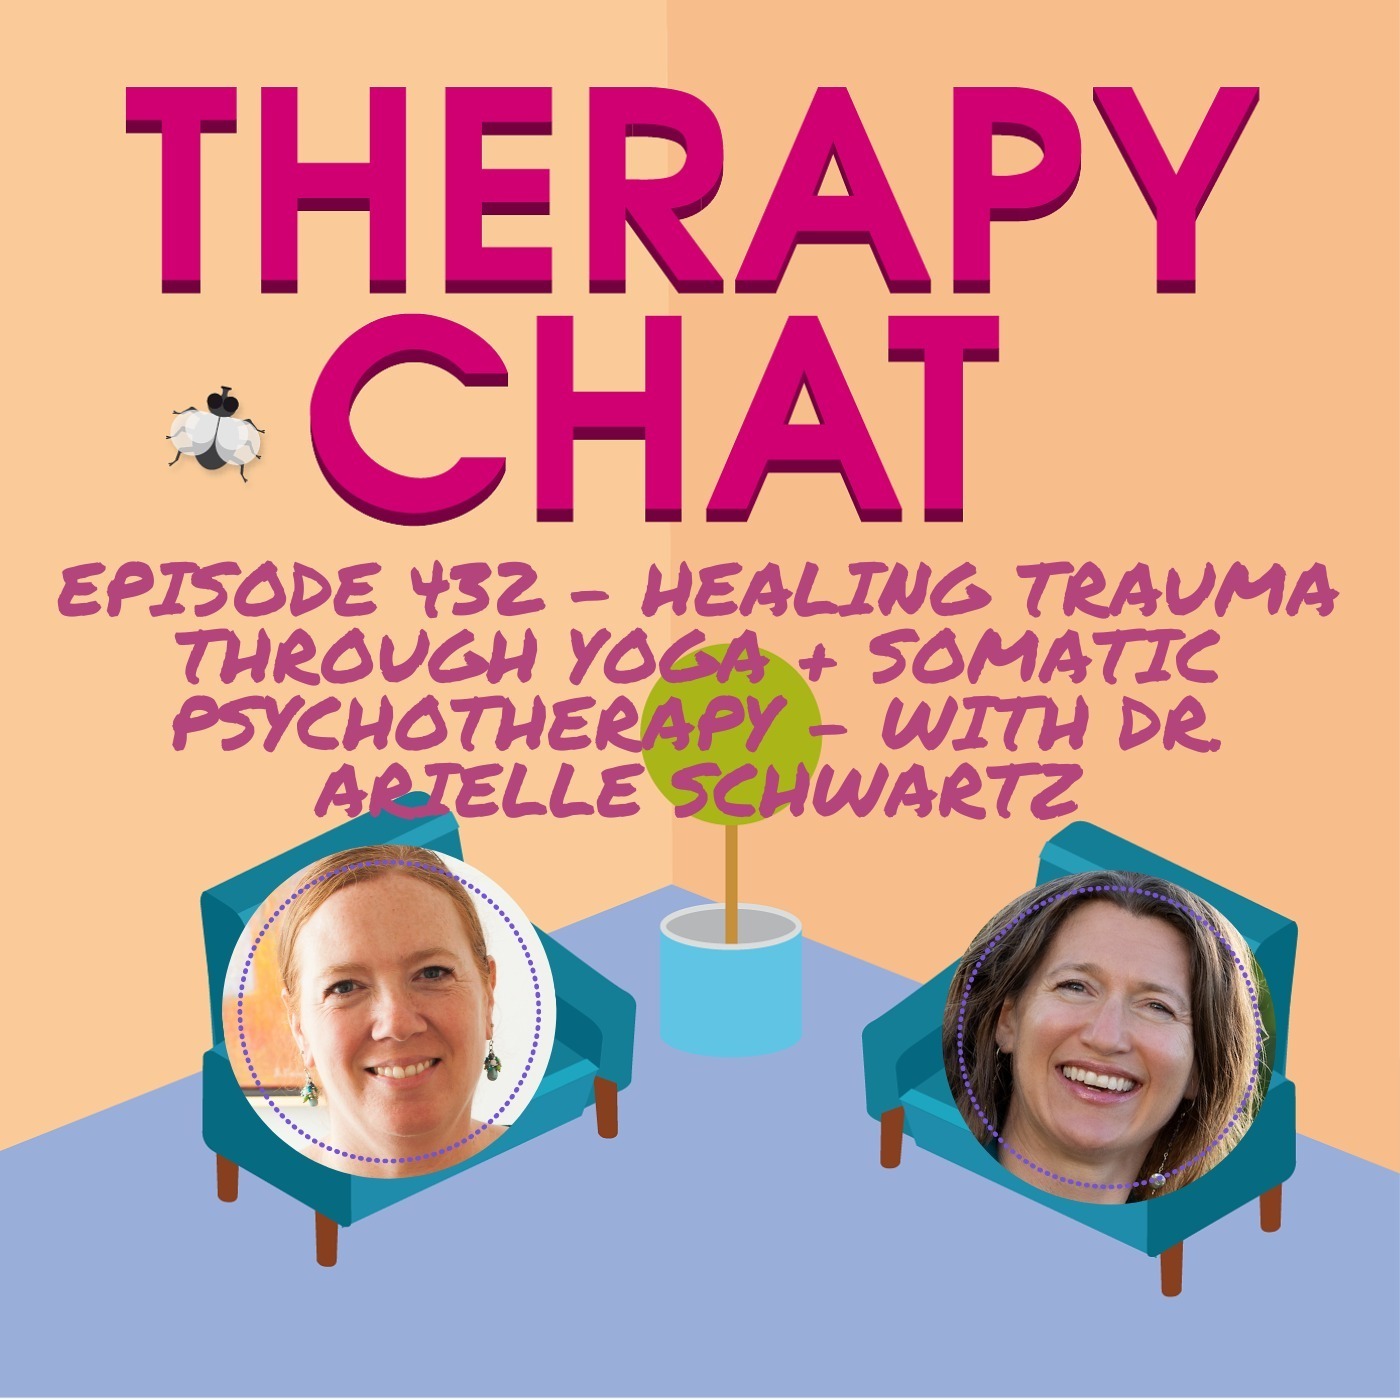 432: Healing Trauma Through Yoga + Somatic Psychotherapy - With Dr. Arielle Schwartz